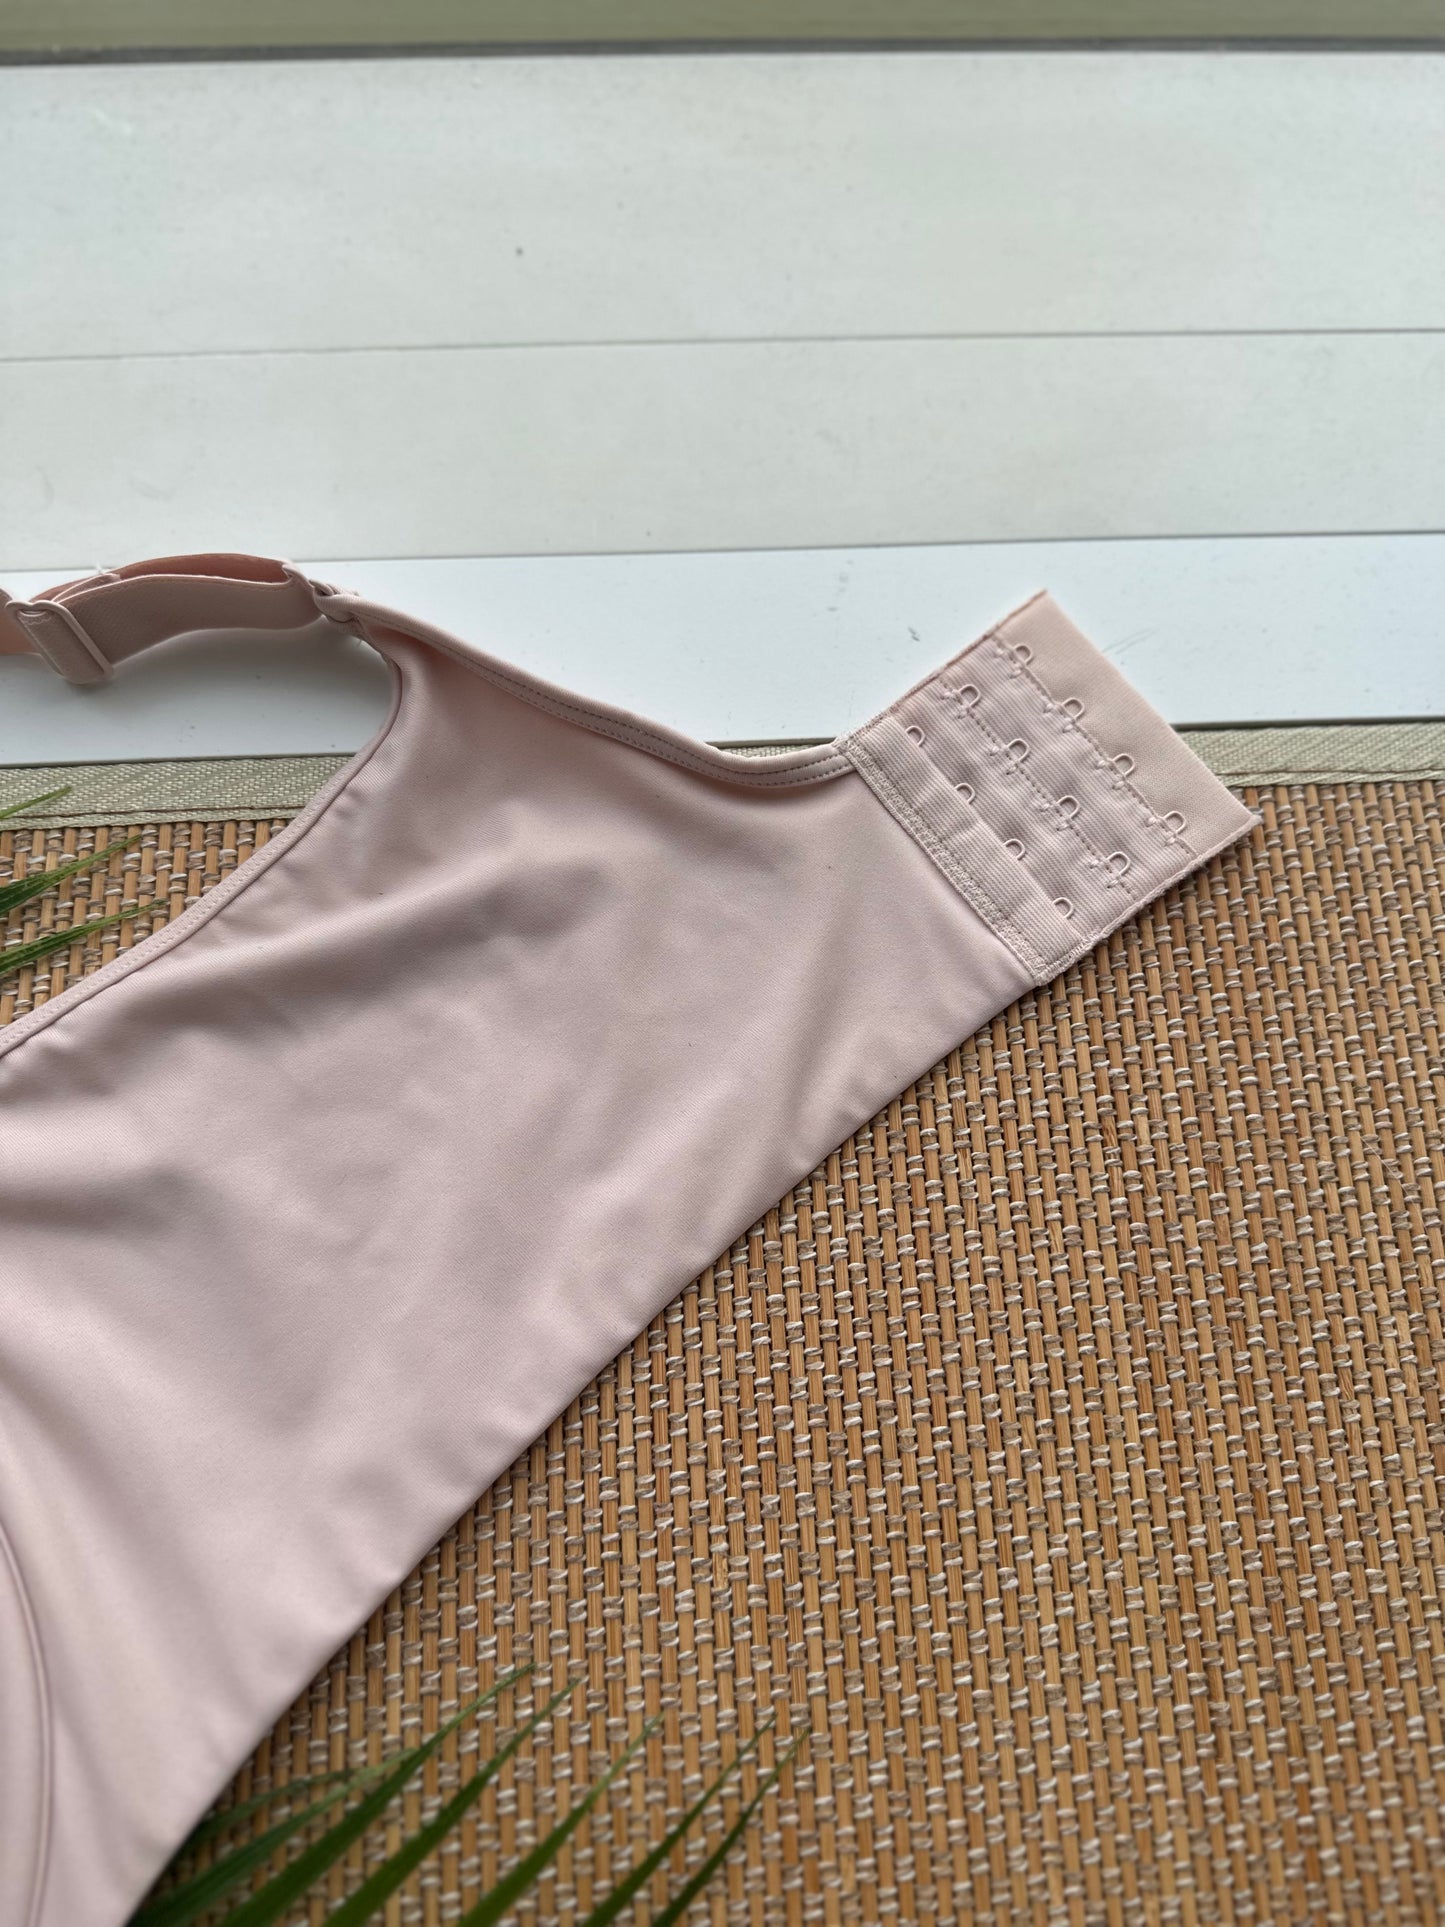 BL Seamless Pink Tshirt Plus Size Bra